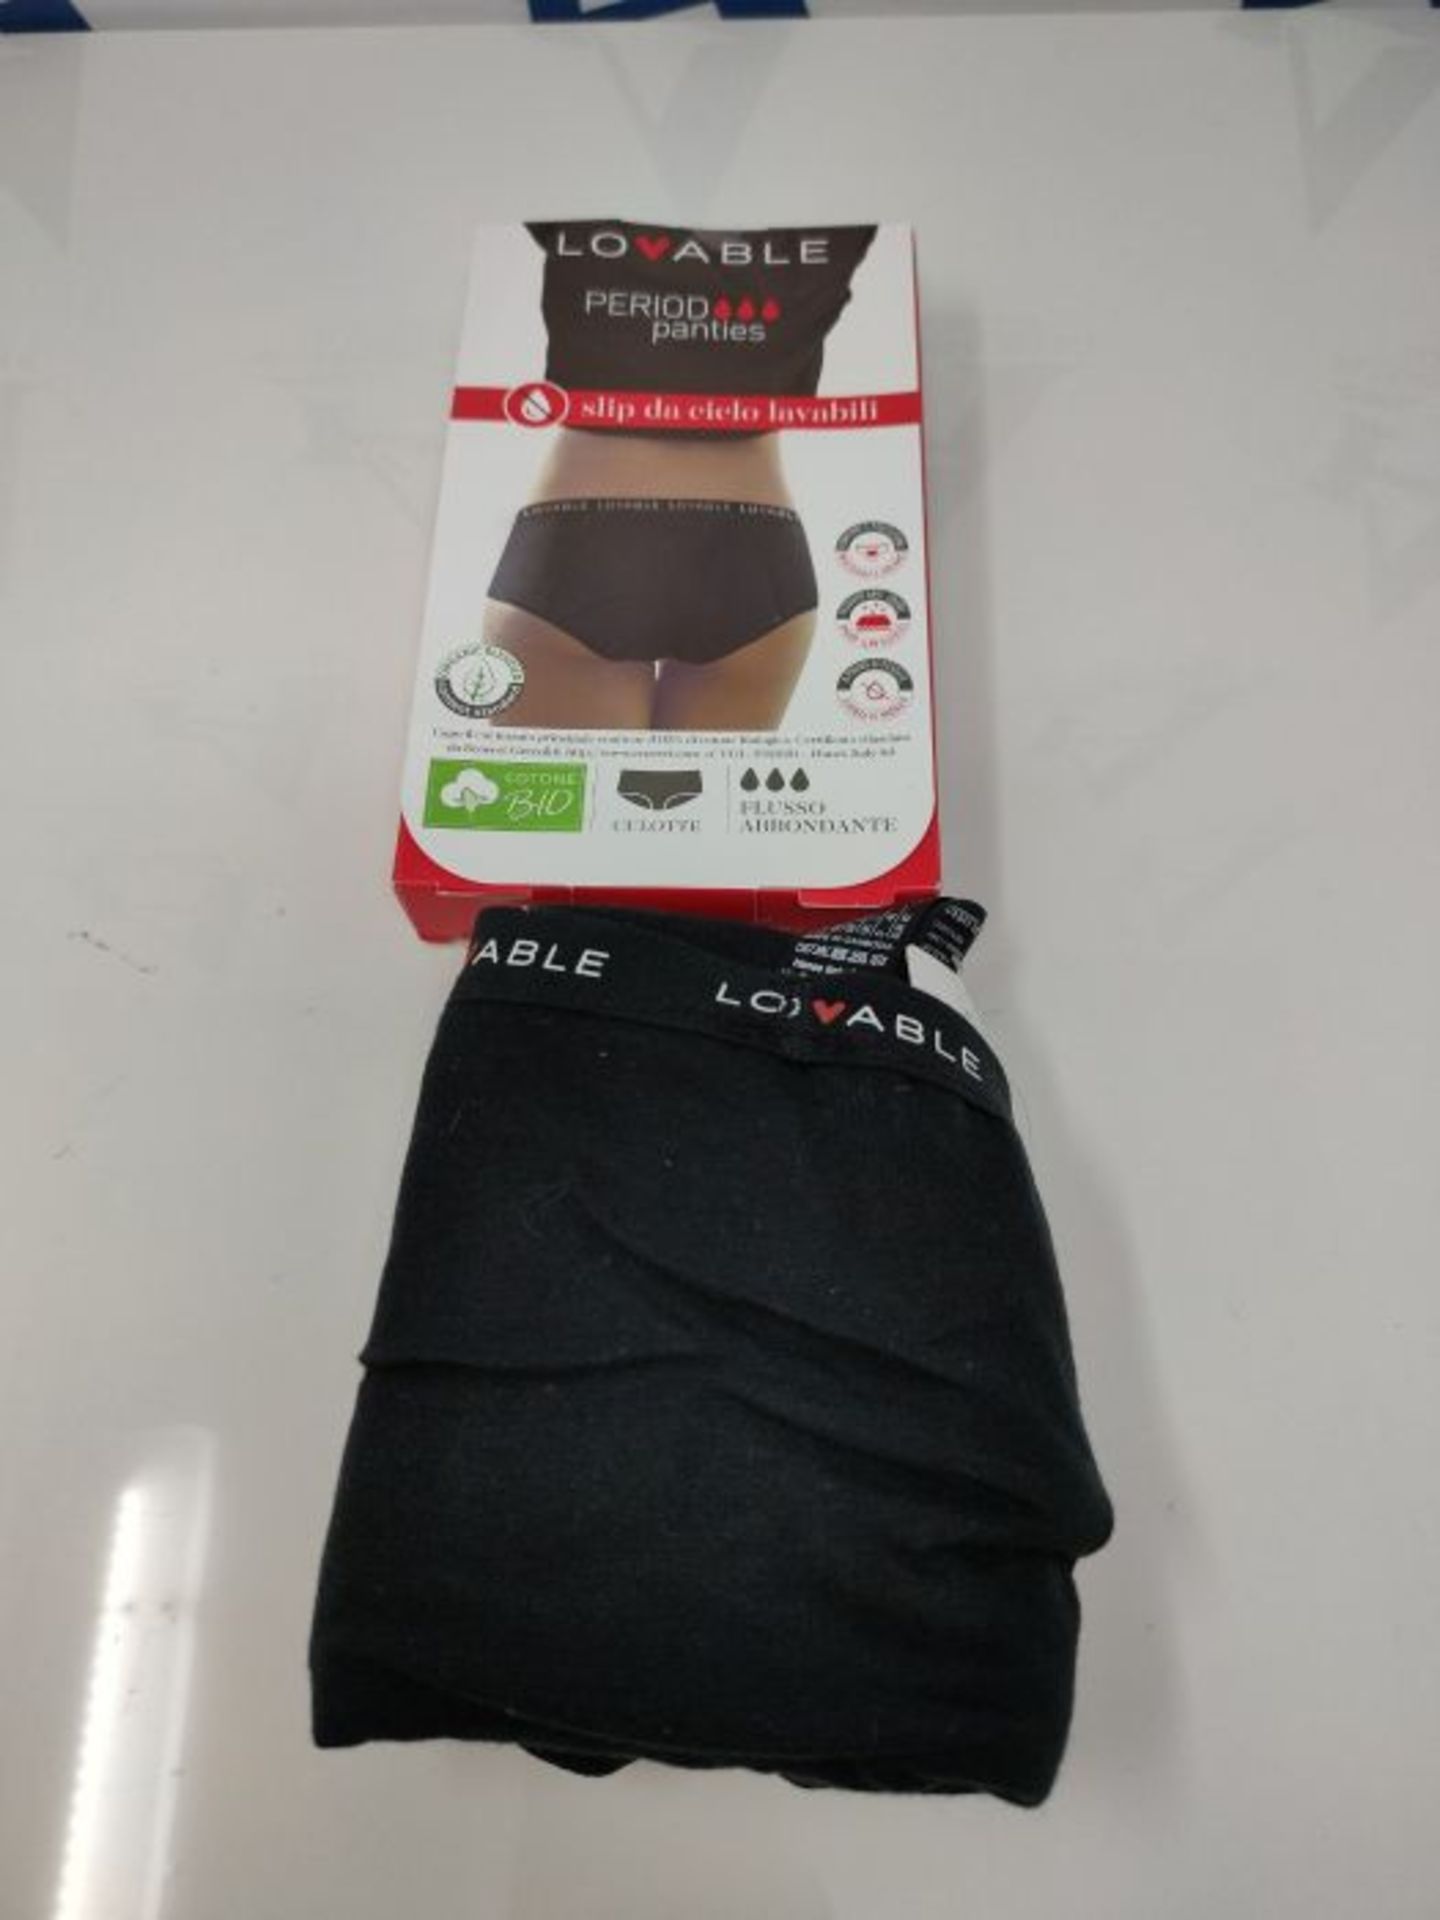 Lovable Women's Period Panties Underwear, Nero, L (Pack of 2) - Image 3 of 3